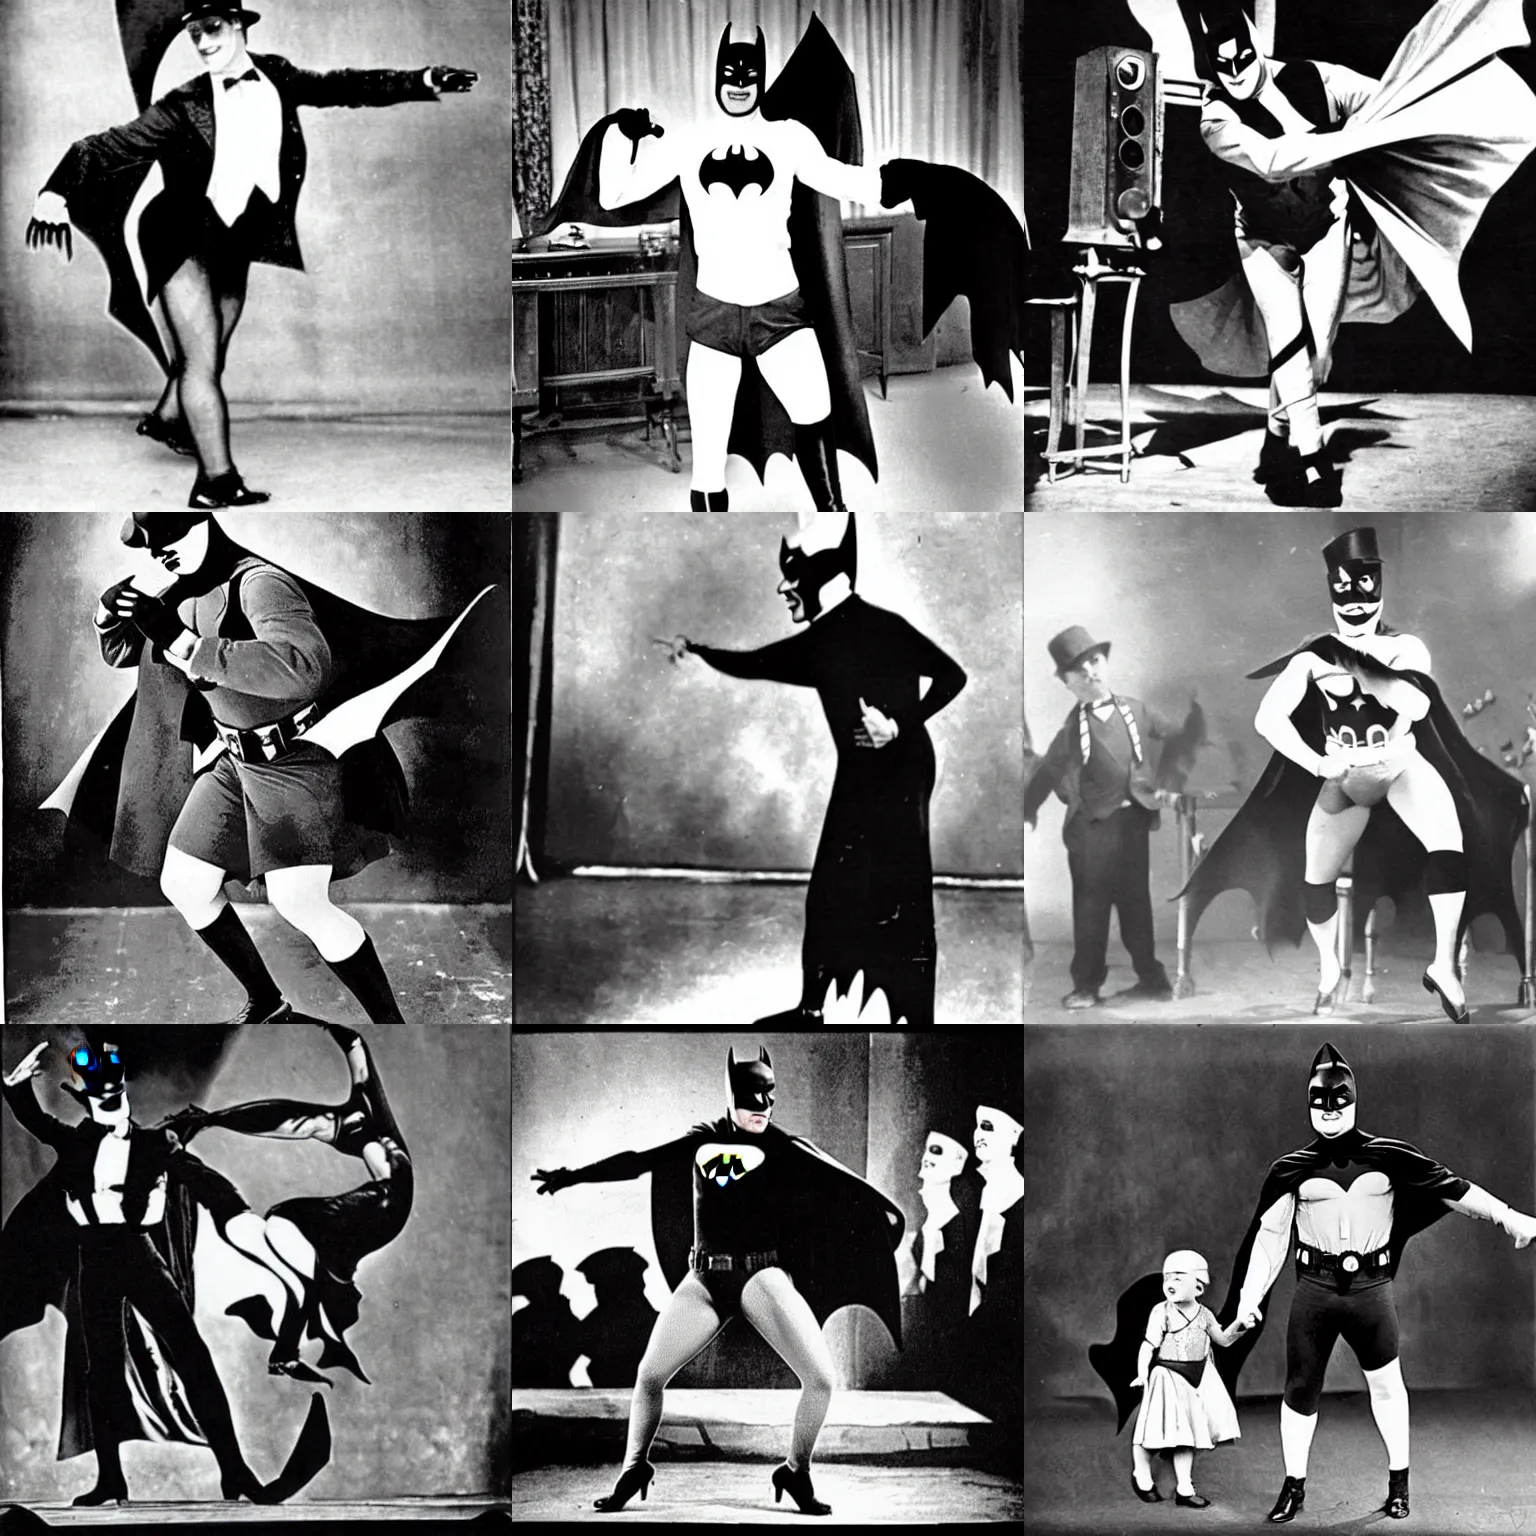 Prompt: batman dancing in a vaudeville show, 1 9 2 0 s television still